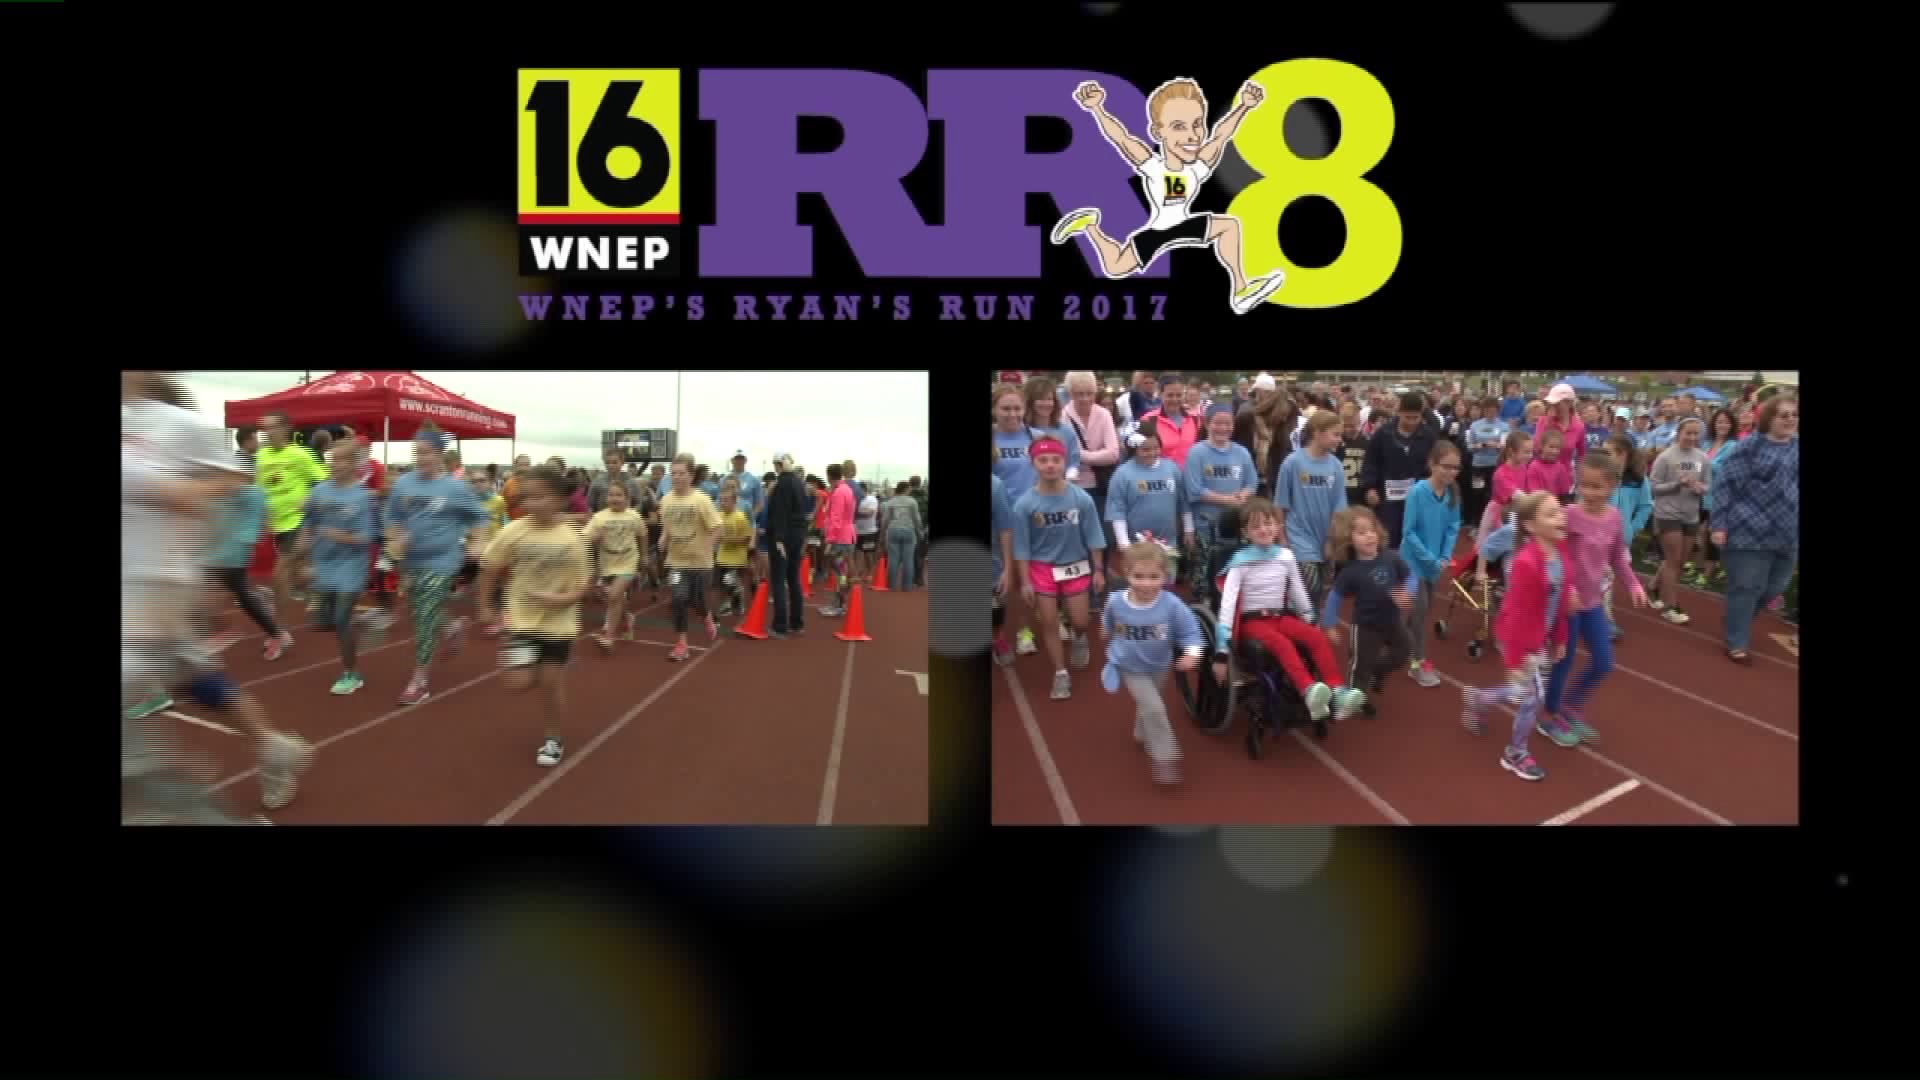 WNEP's Ryan's Run 5K & All Abilities Walk 2017